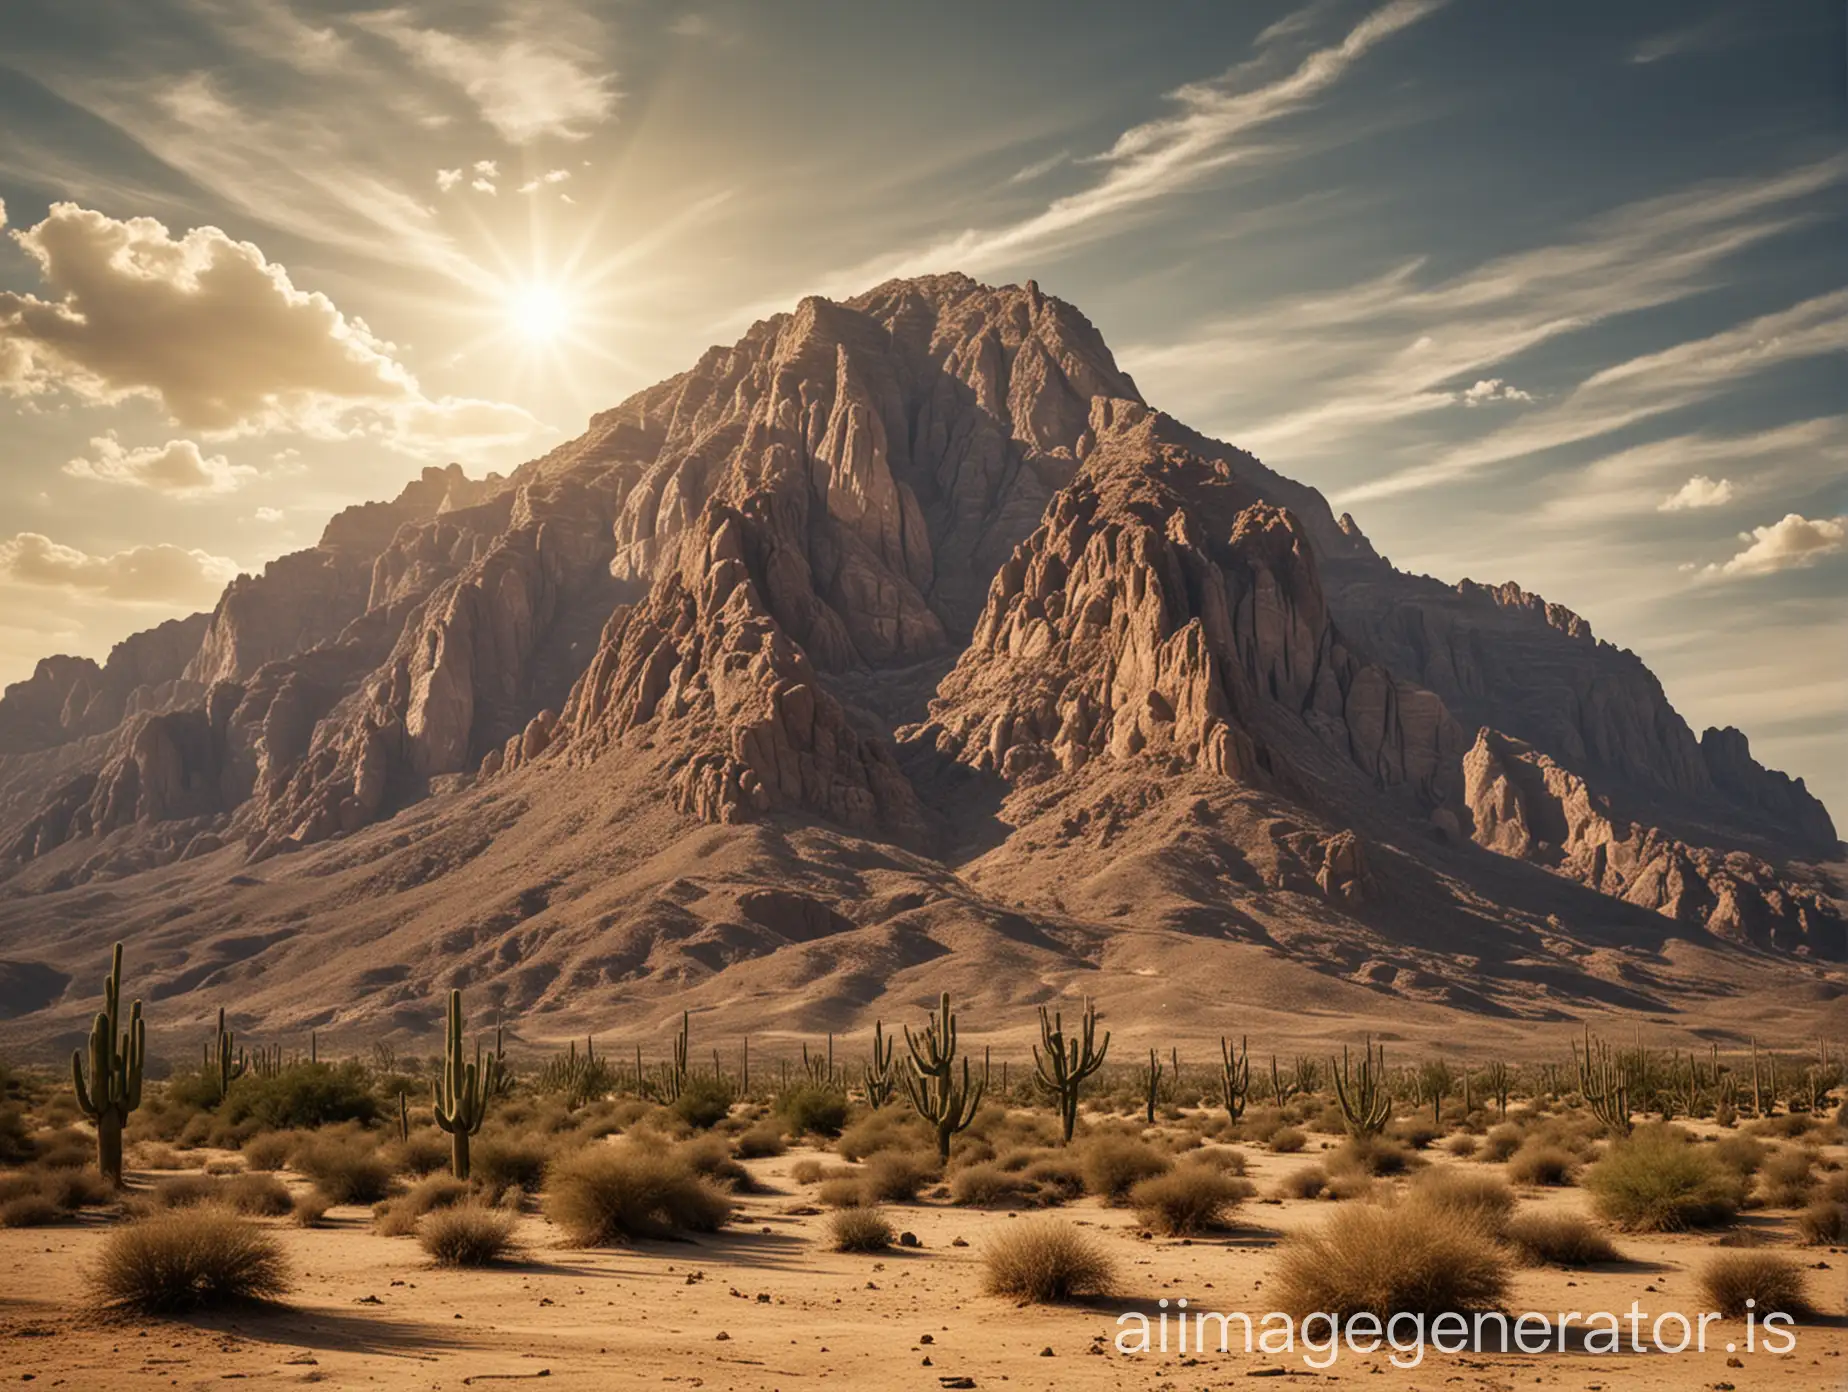 Sacred mountain at the desert.